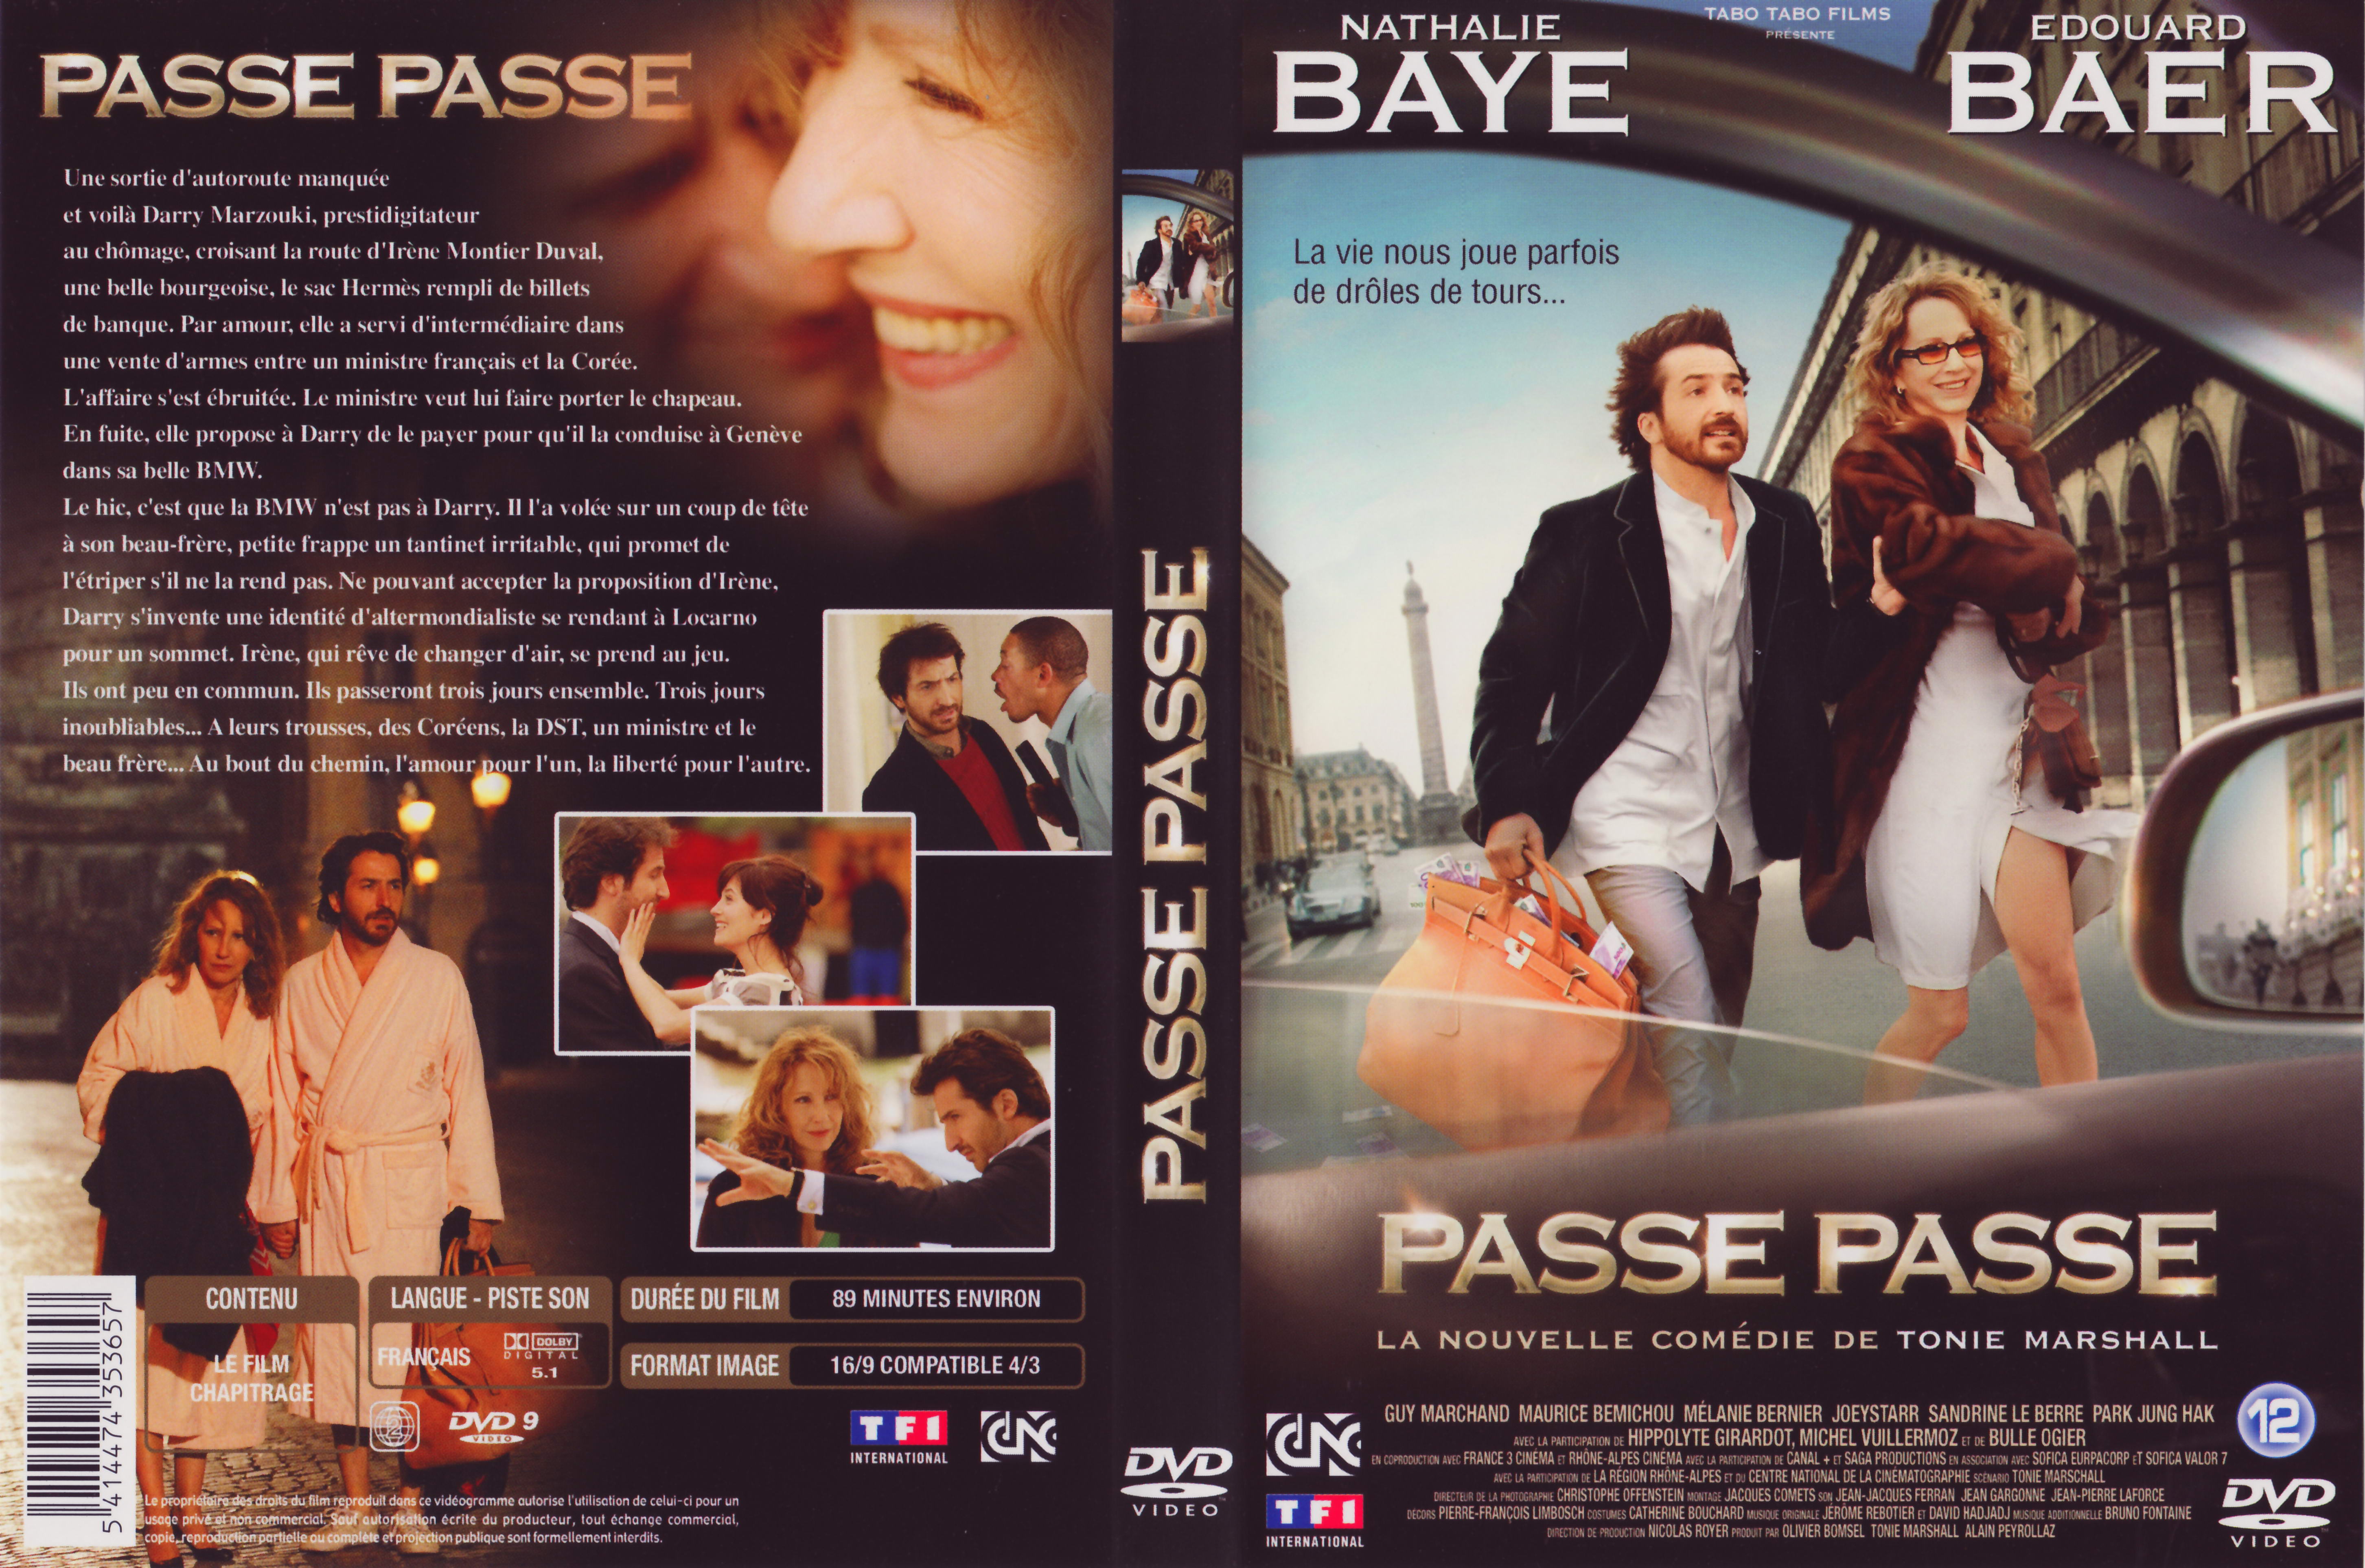 Jaquette DVD Passe passe